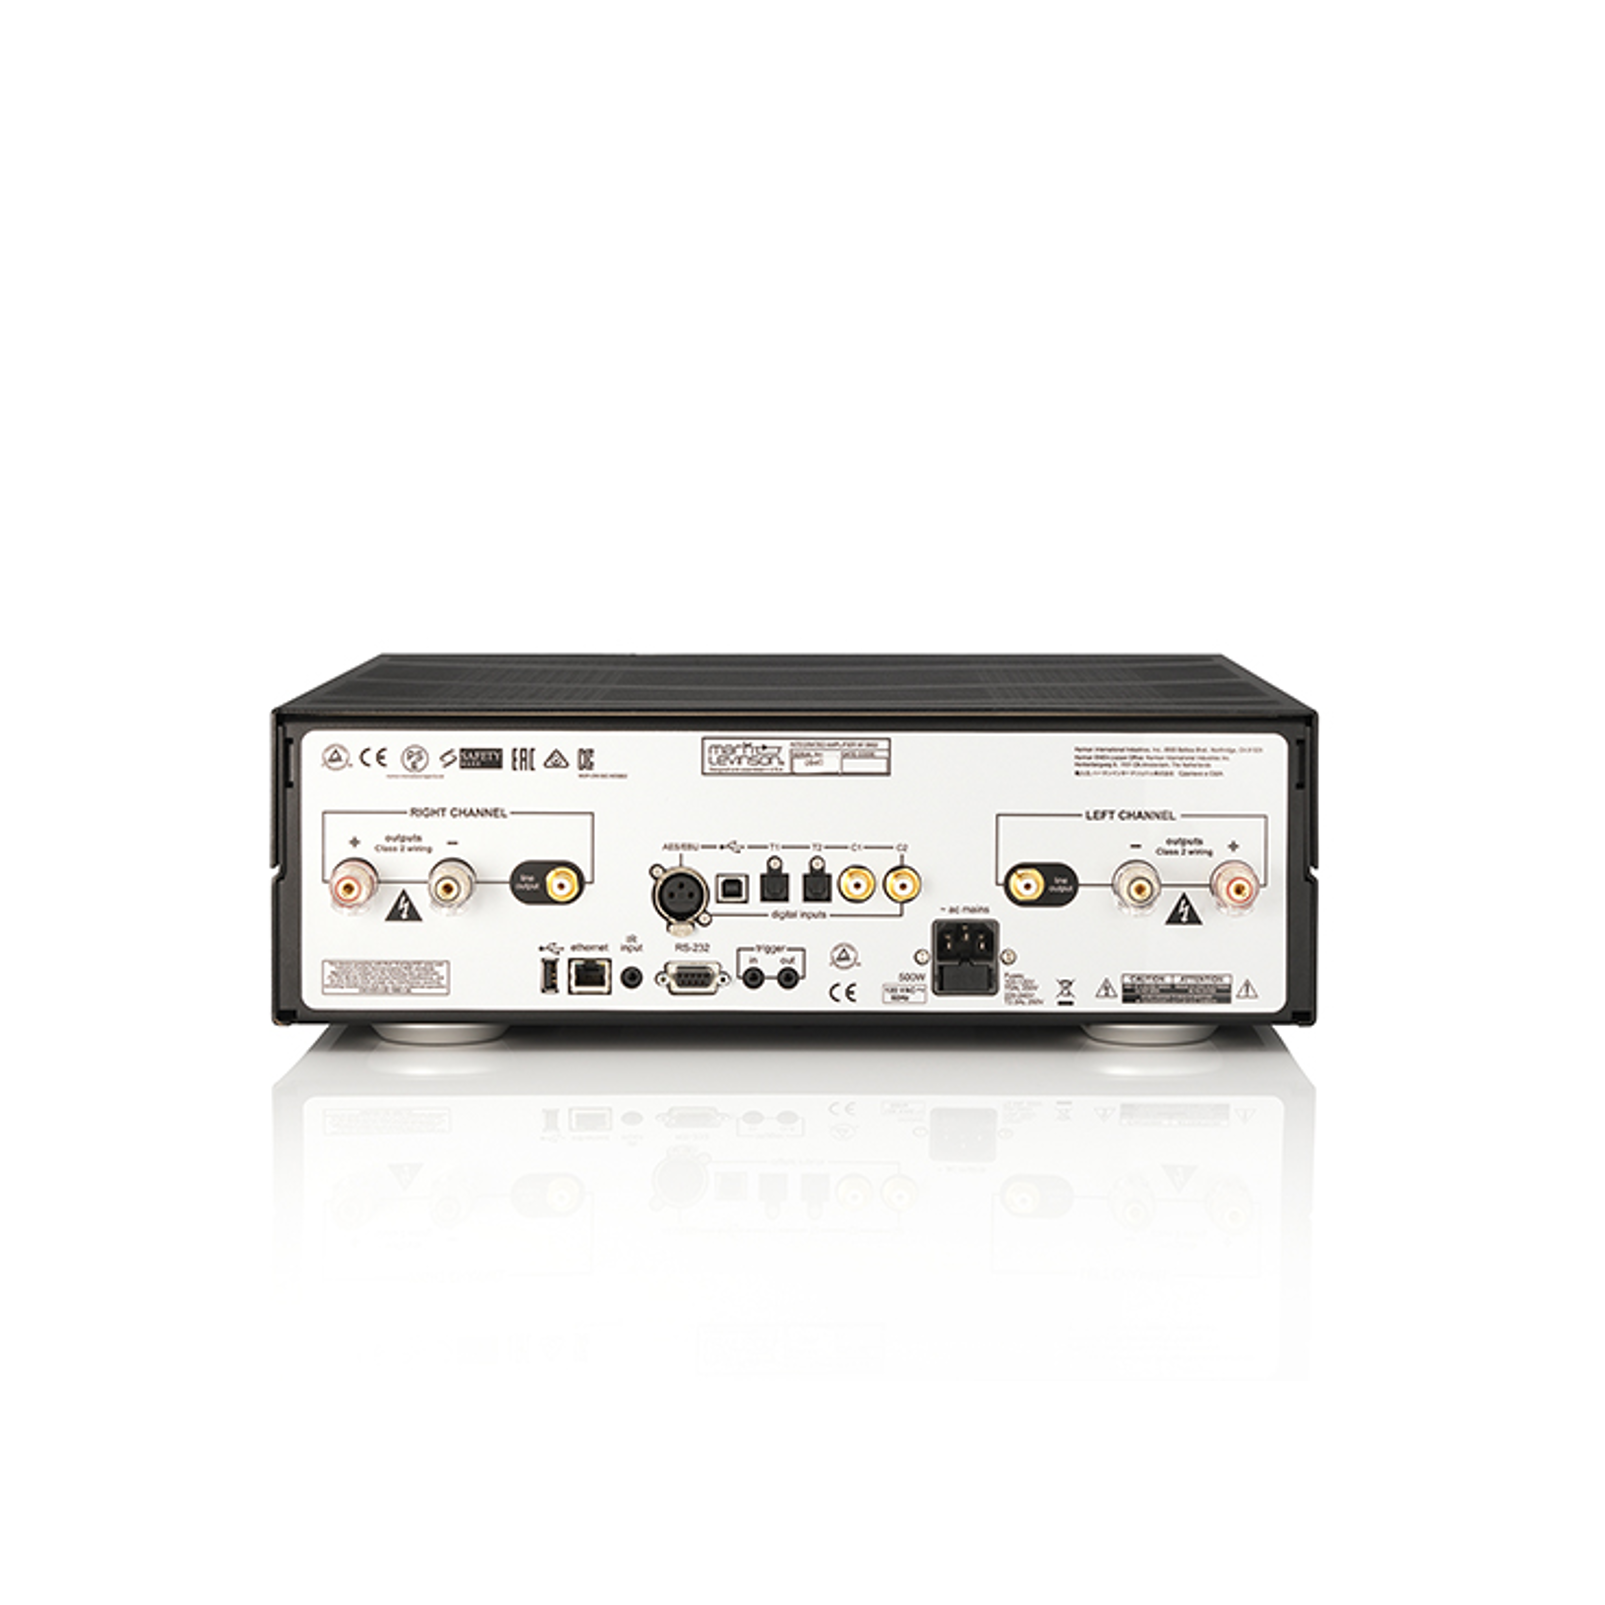 № 5802 - Black / Silver - Integrated Amplifier for Digital sources - Back